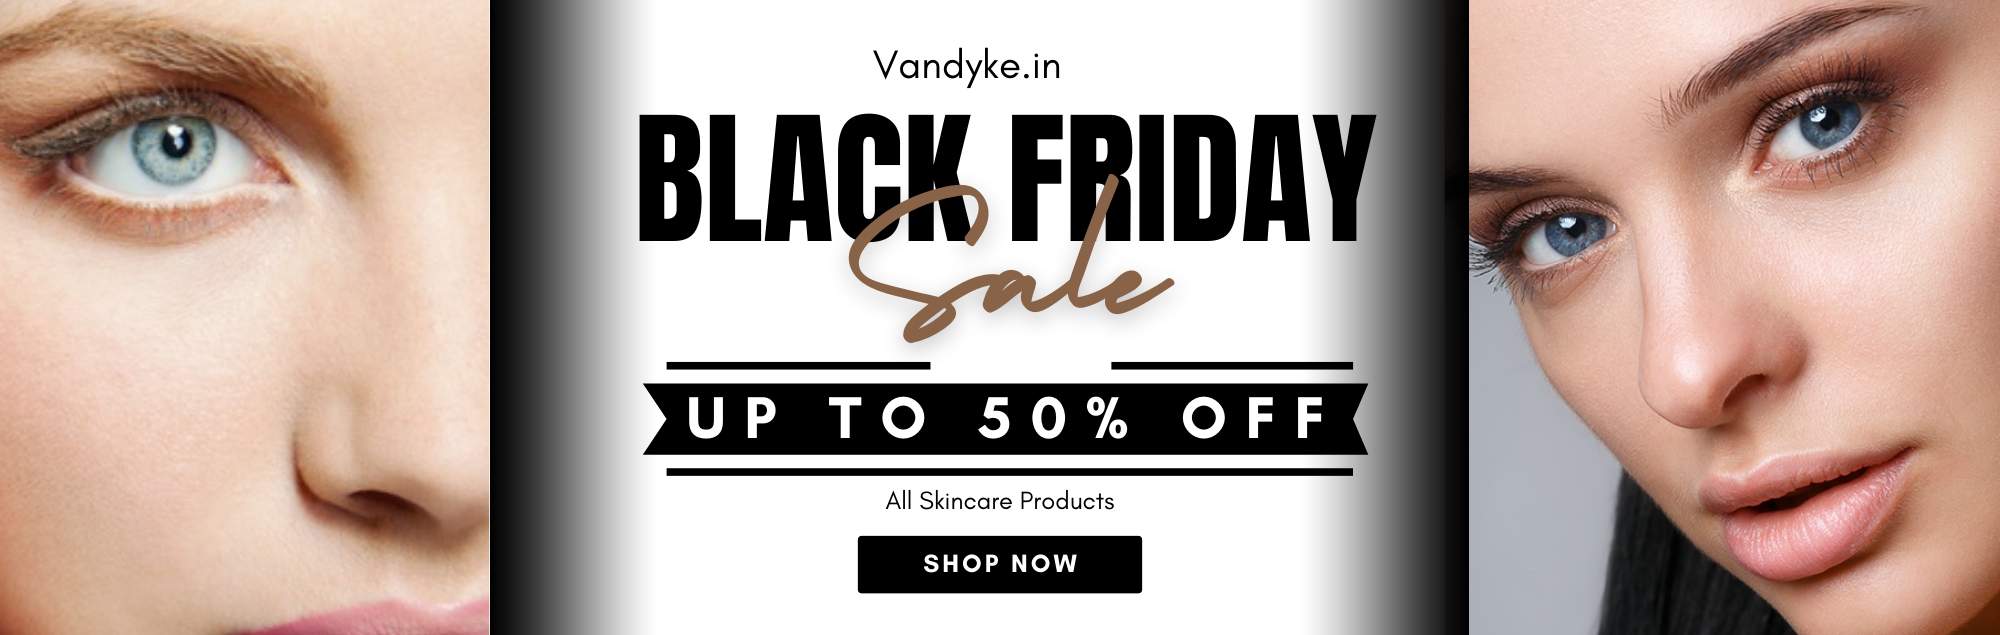 Black friday sale on Skincare products - Vandyke